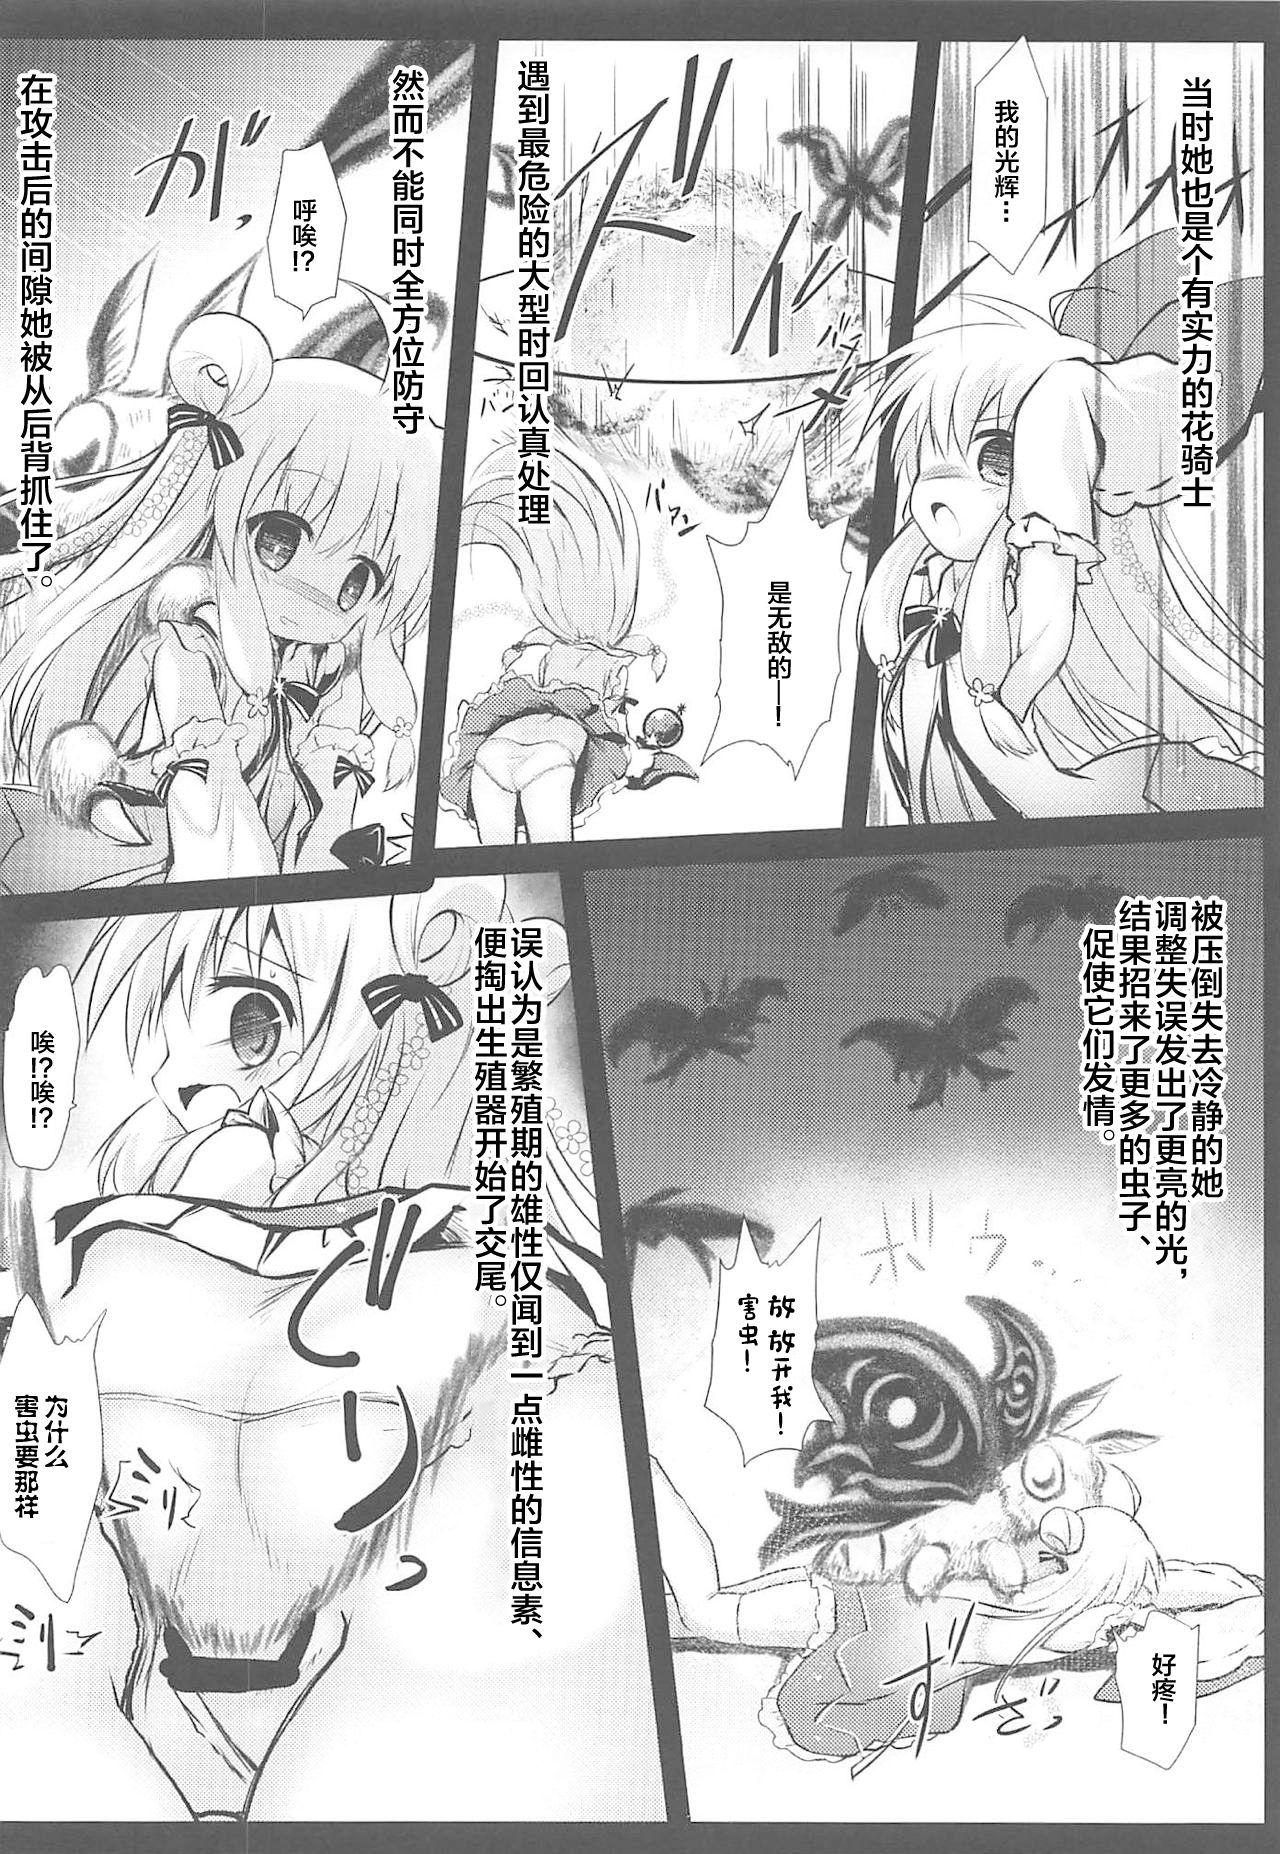 Cdmx Gaichuu Higai Houkokusho File 3 - Flower knight girl Petite - Page 6